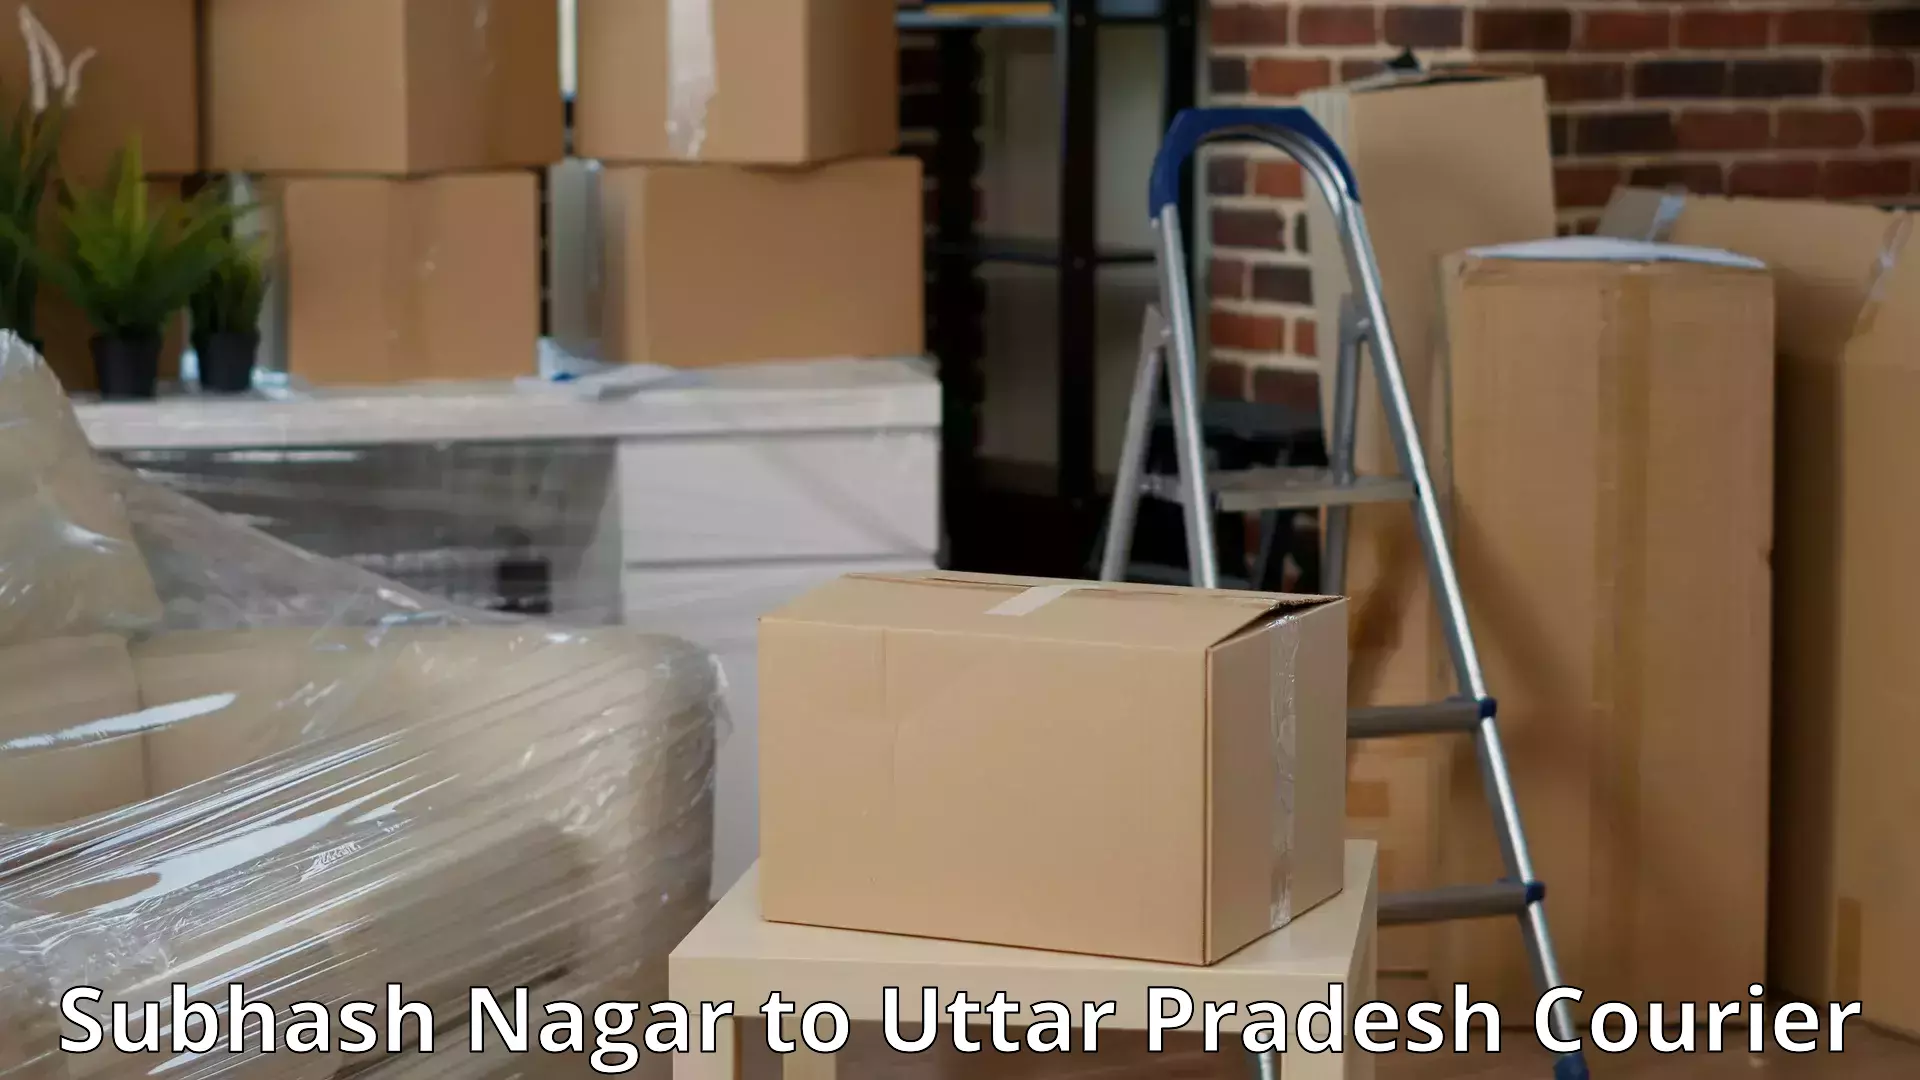 Professional movers Subhash Nagar to Vrindavan